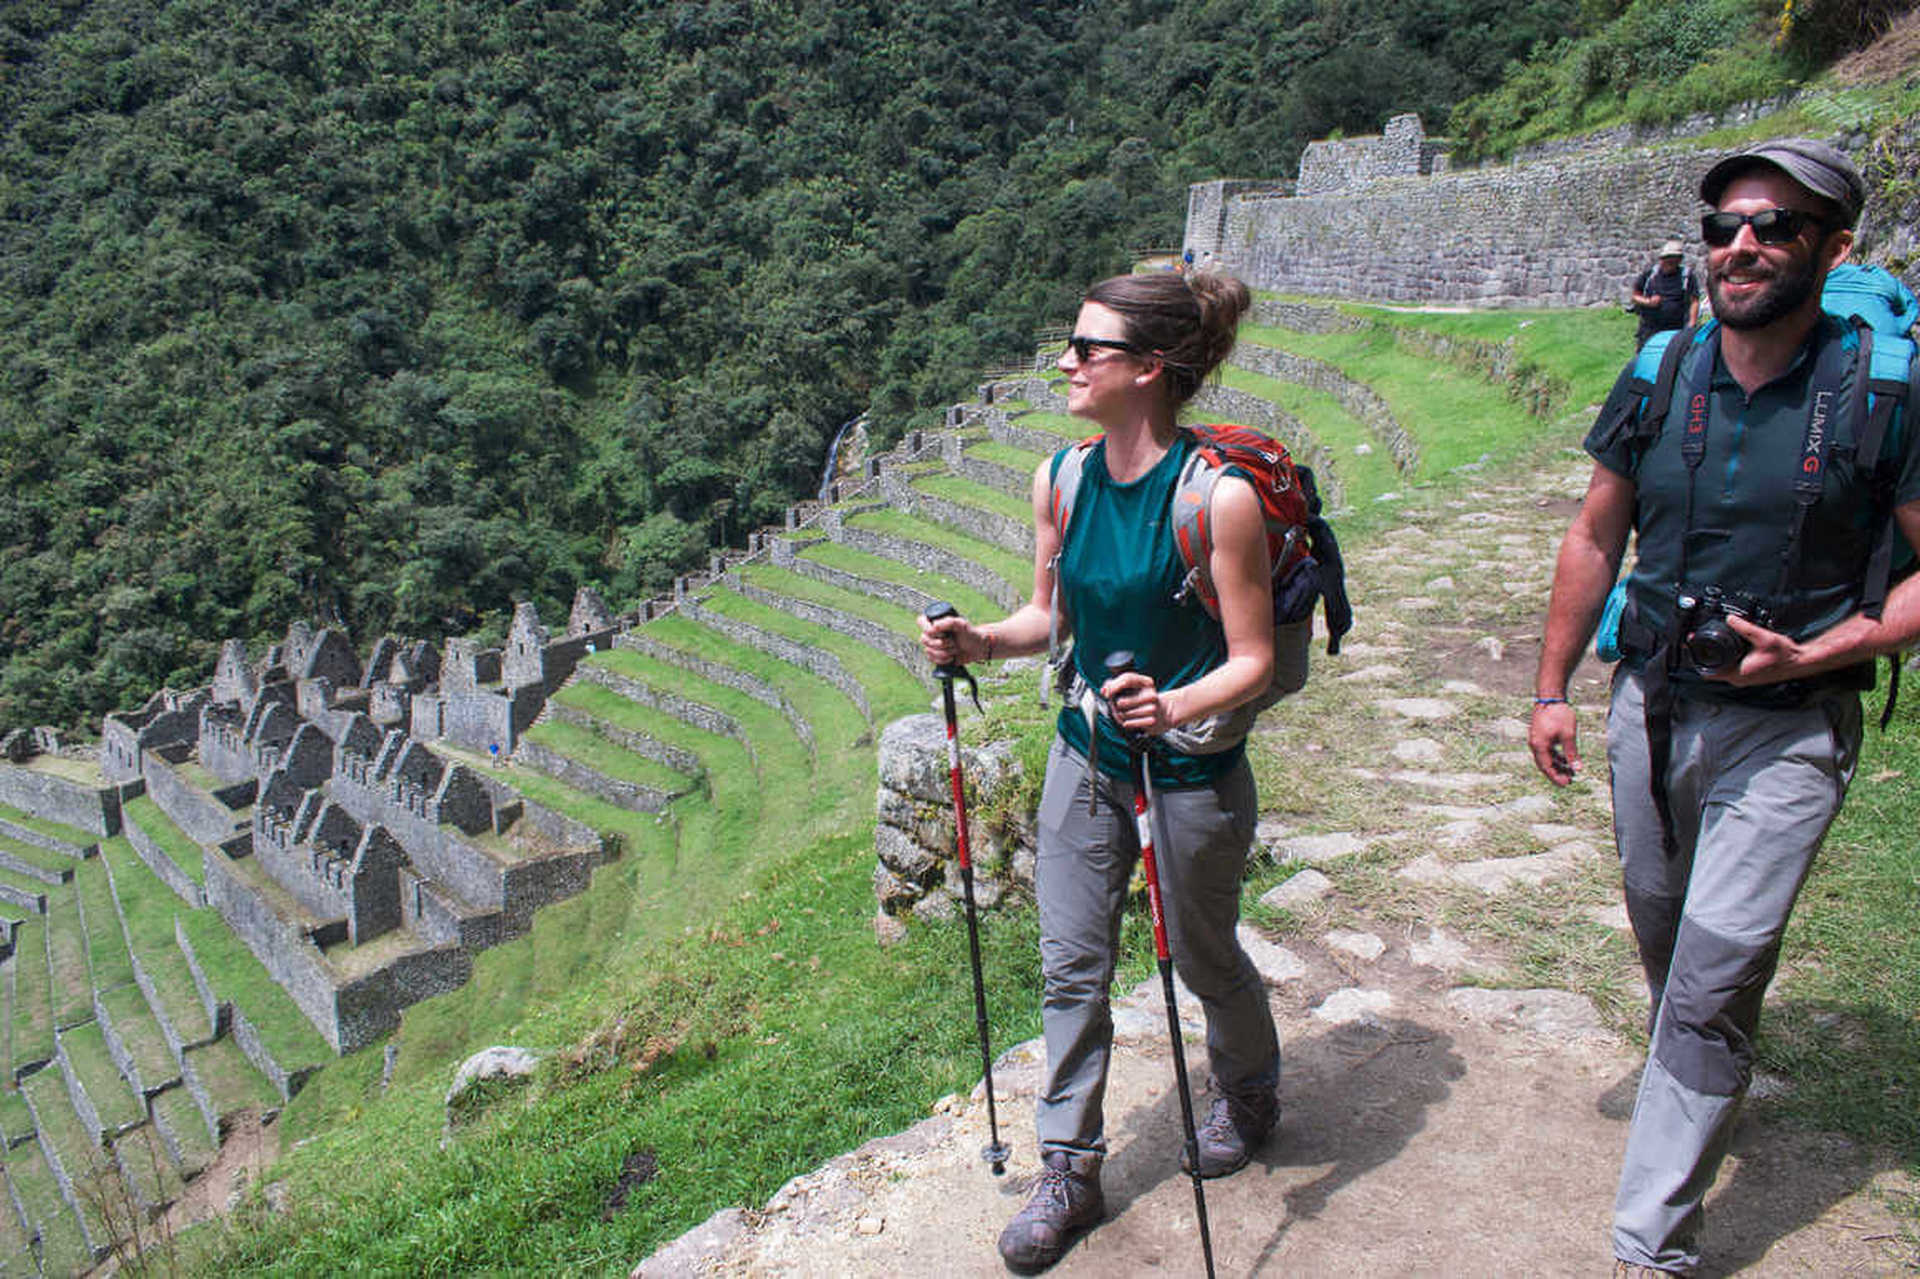 Hikers in Inca ruins in Peru on the Inca Trail